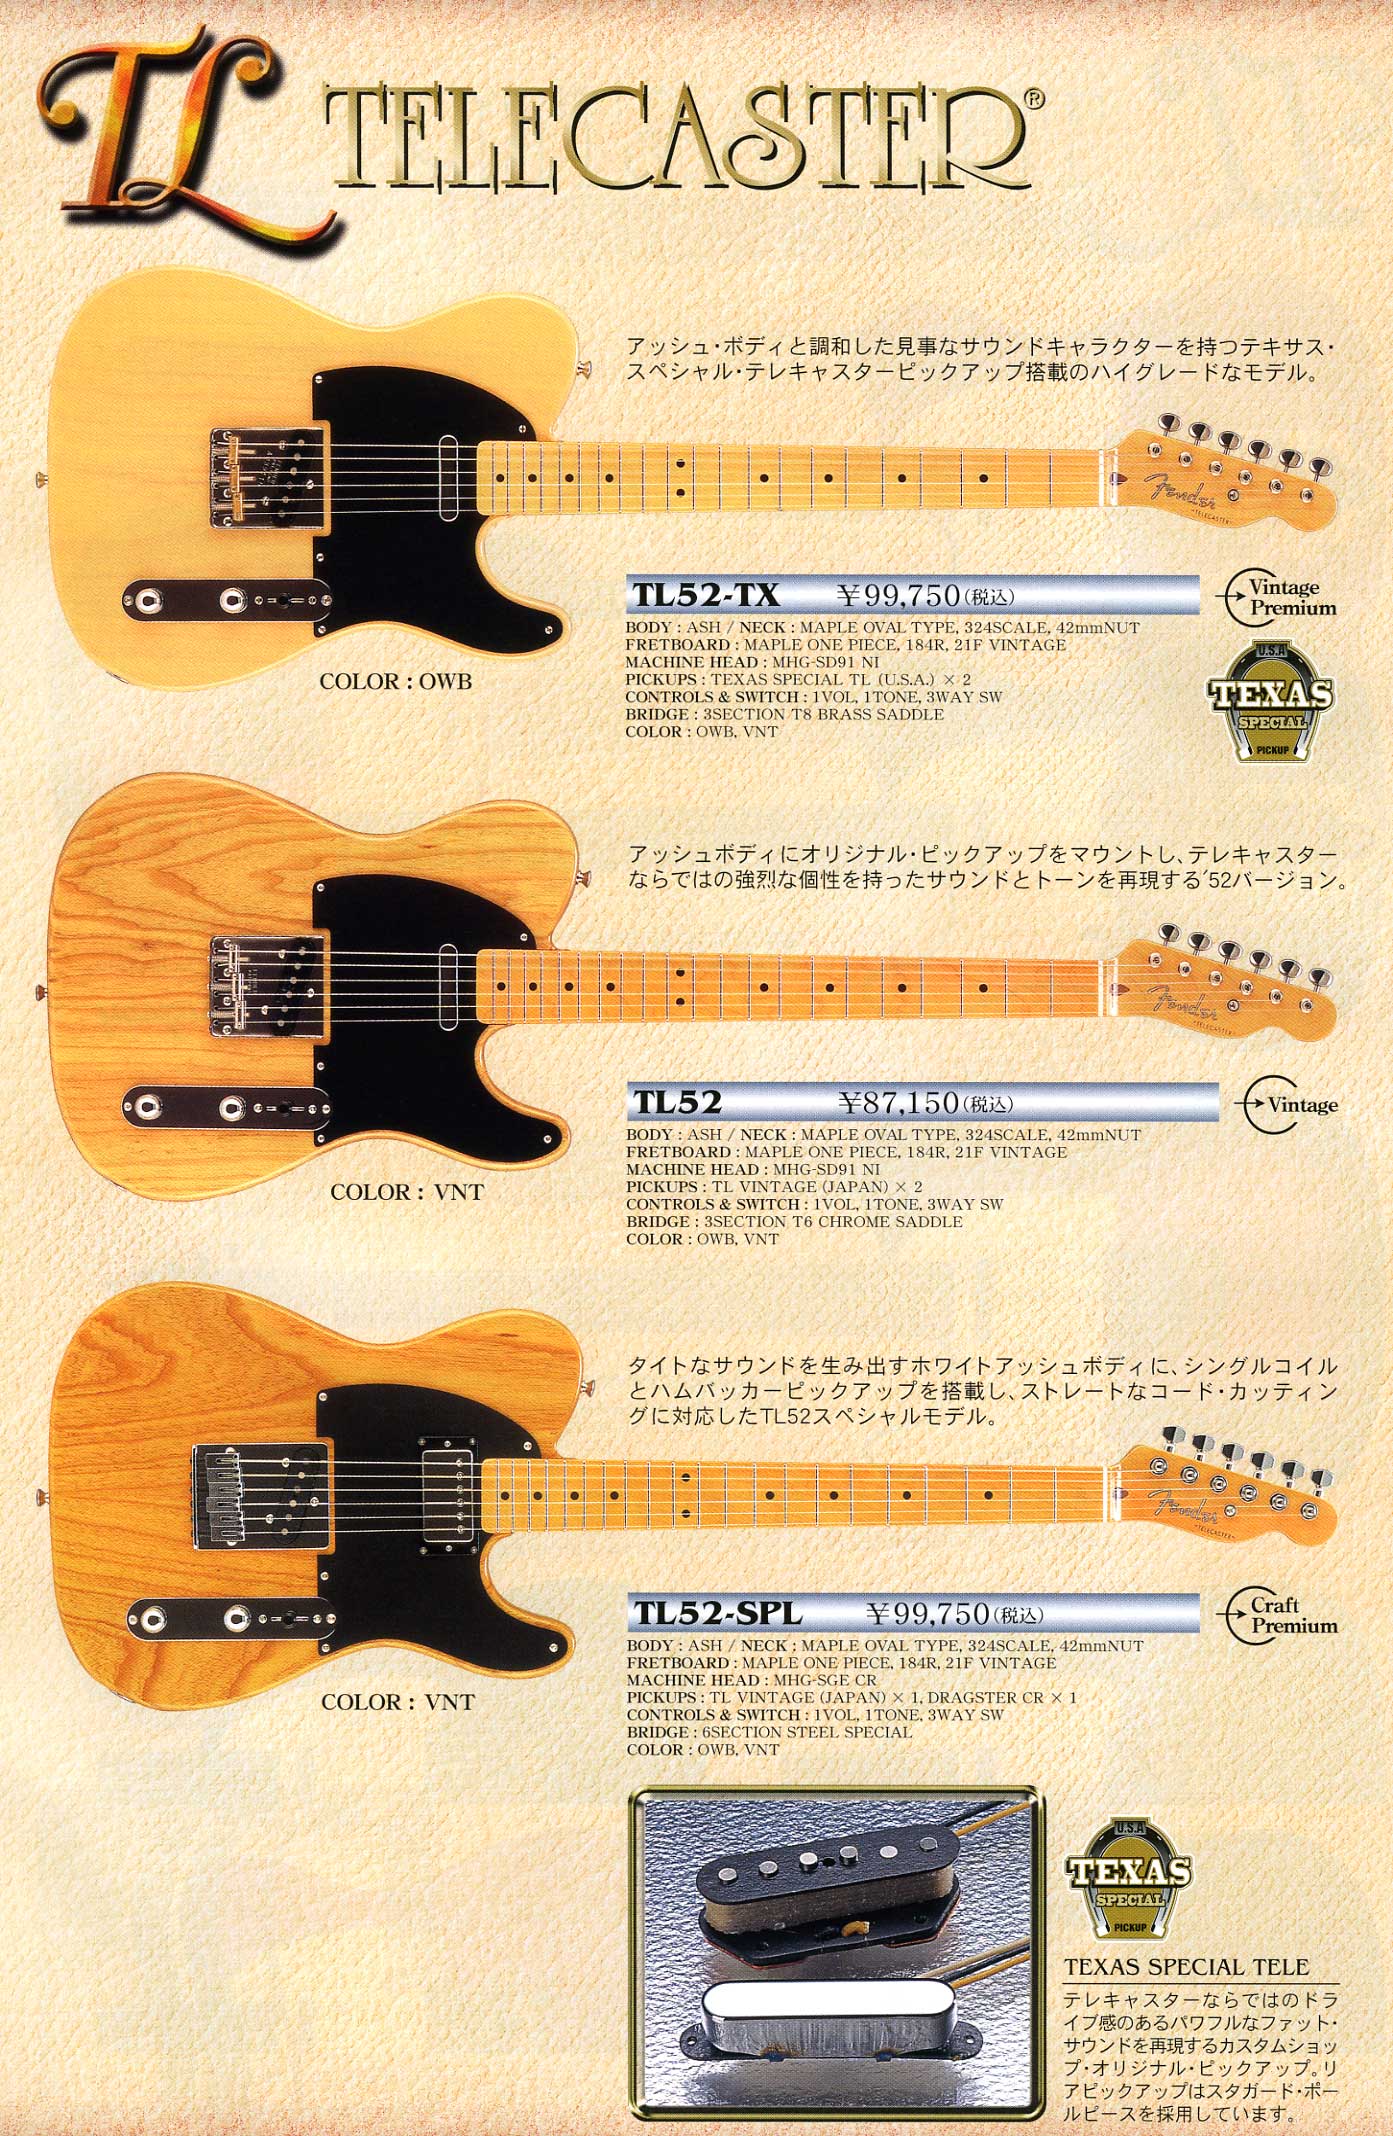 Gear] Fender 52 reissue MIJ Telecaster. : r/Guitar